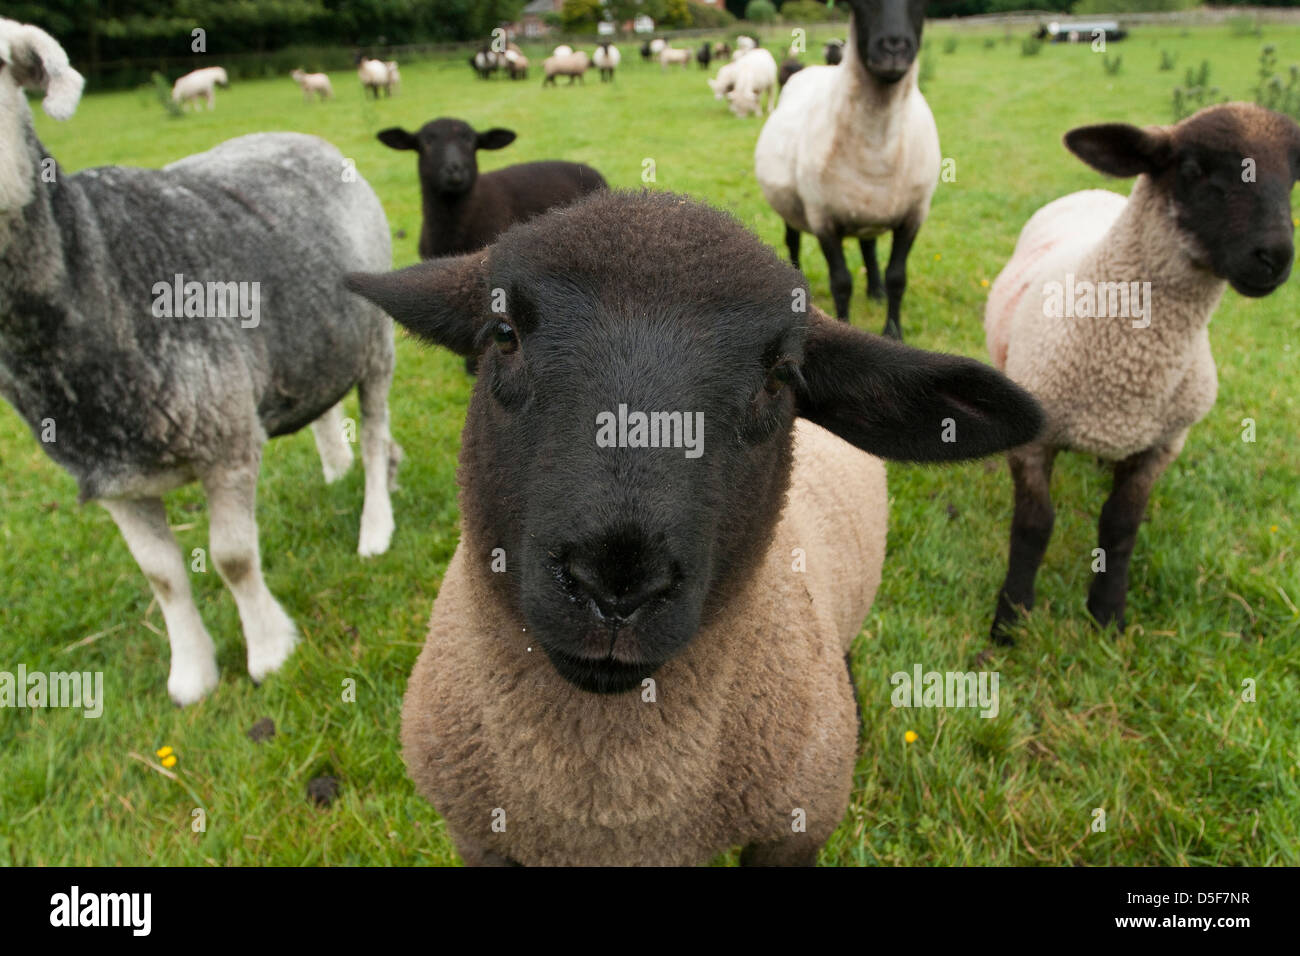 Suffolk sheep posing Stock Photo